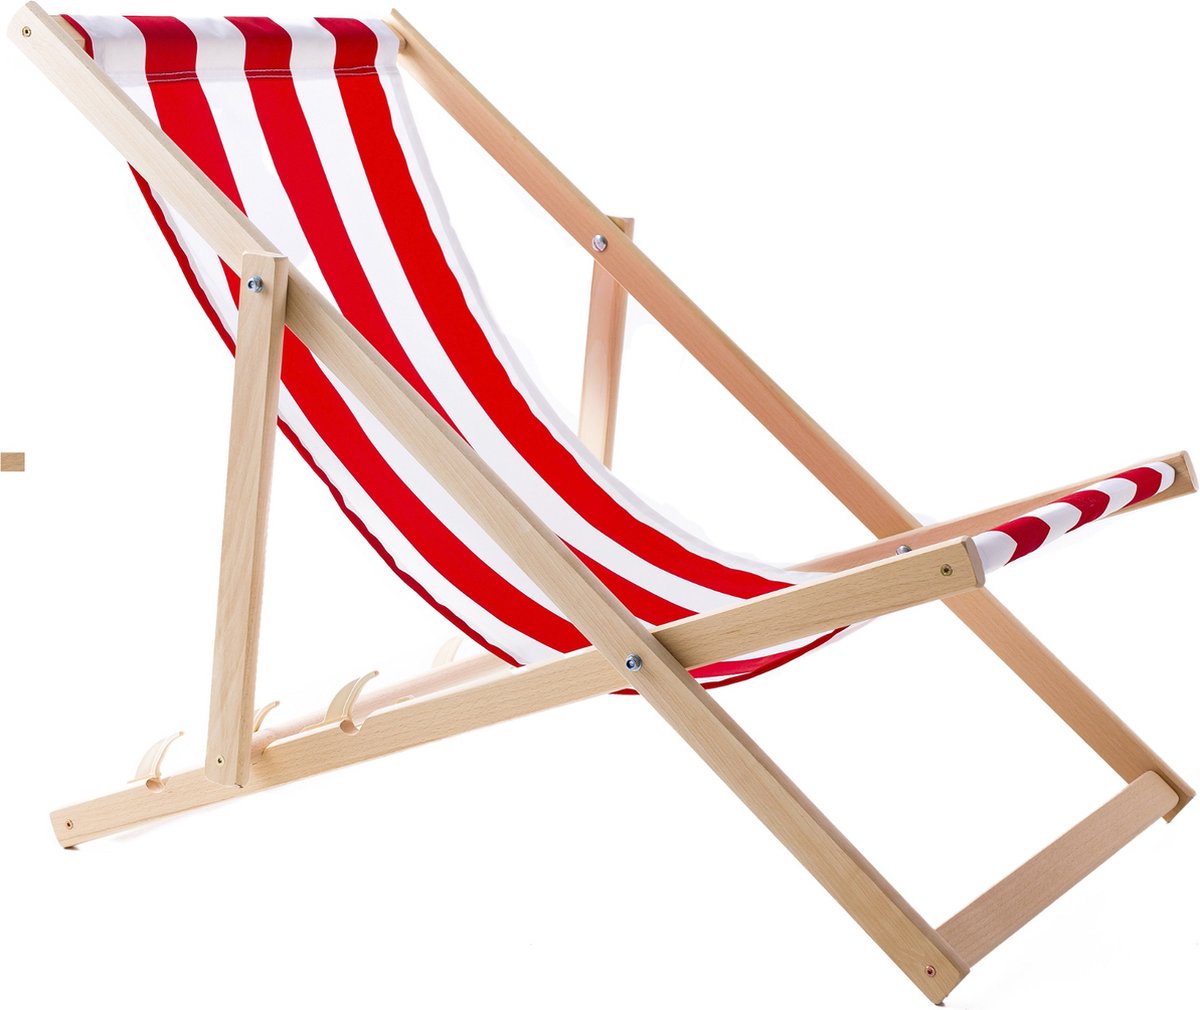 WOODOK - Houten ligstoel gemaakt van hoogwaardig beukenhout met drie verstelbare rugleuningposities / Strandbed - Rood met wit